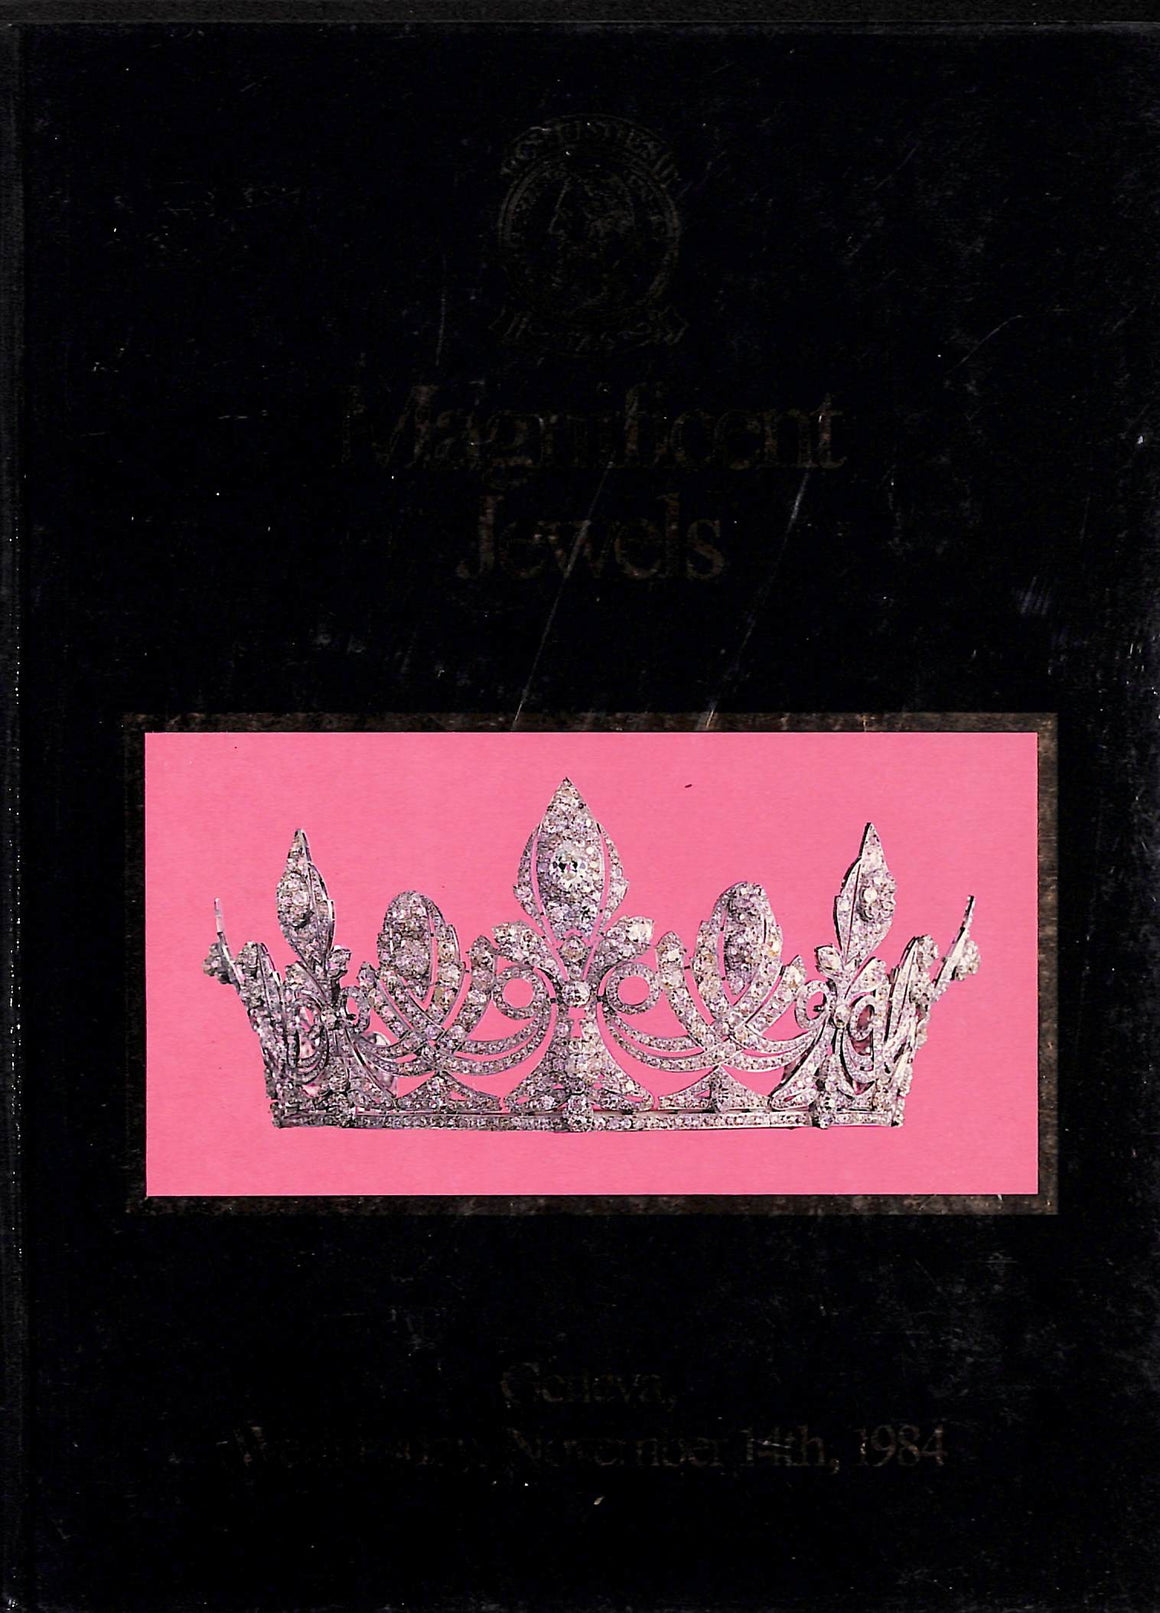 "Magnificent Jewels" 1984 (SOLD)